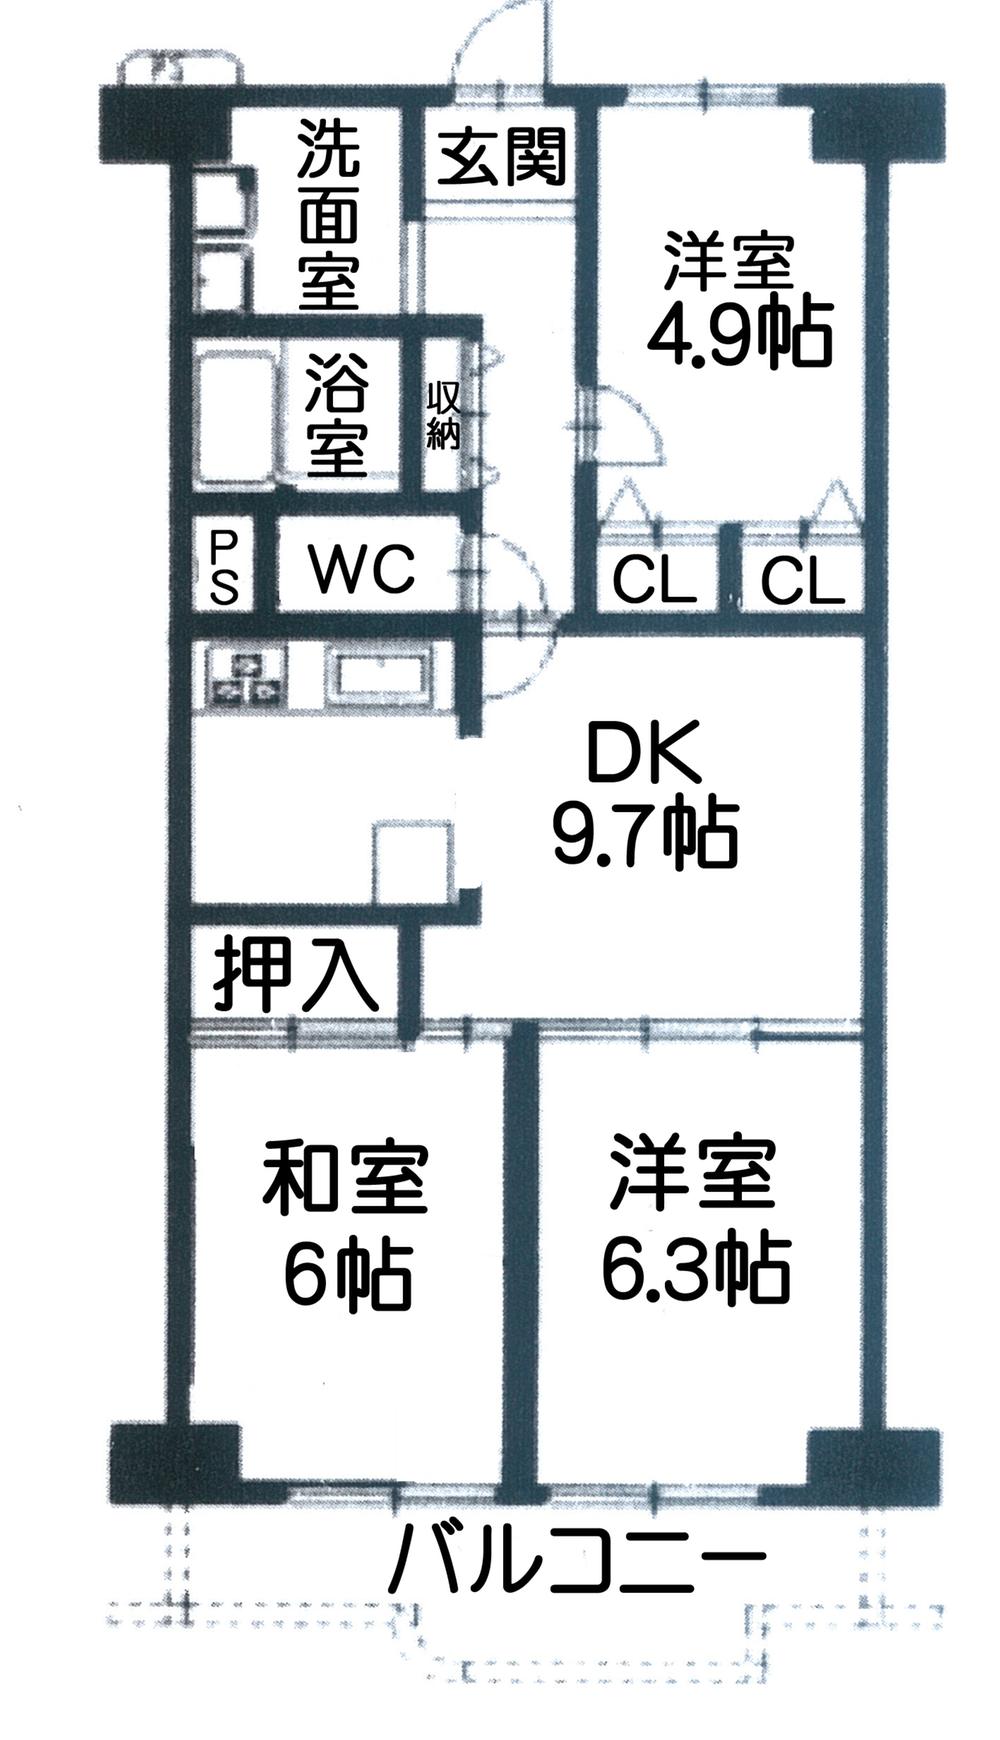 Floor plan. 3LDK, Price 12.8 million yen, Footprint 61.8 sq m